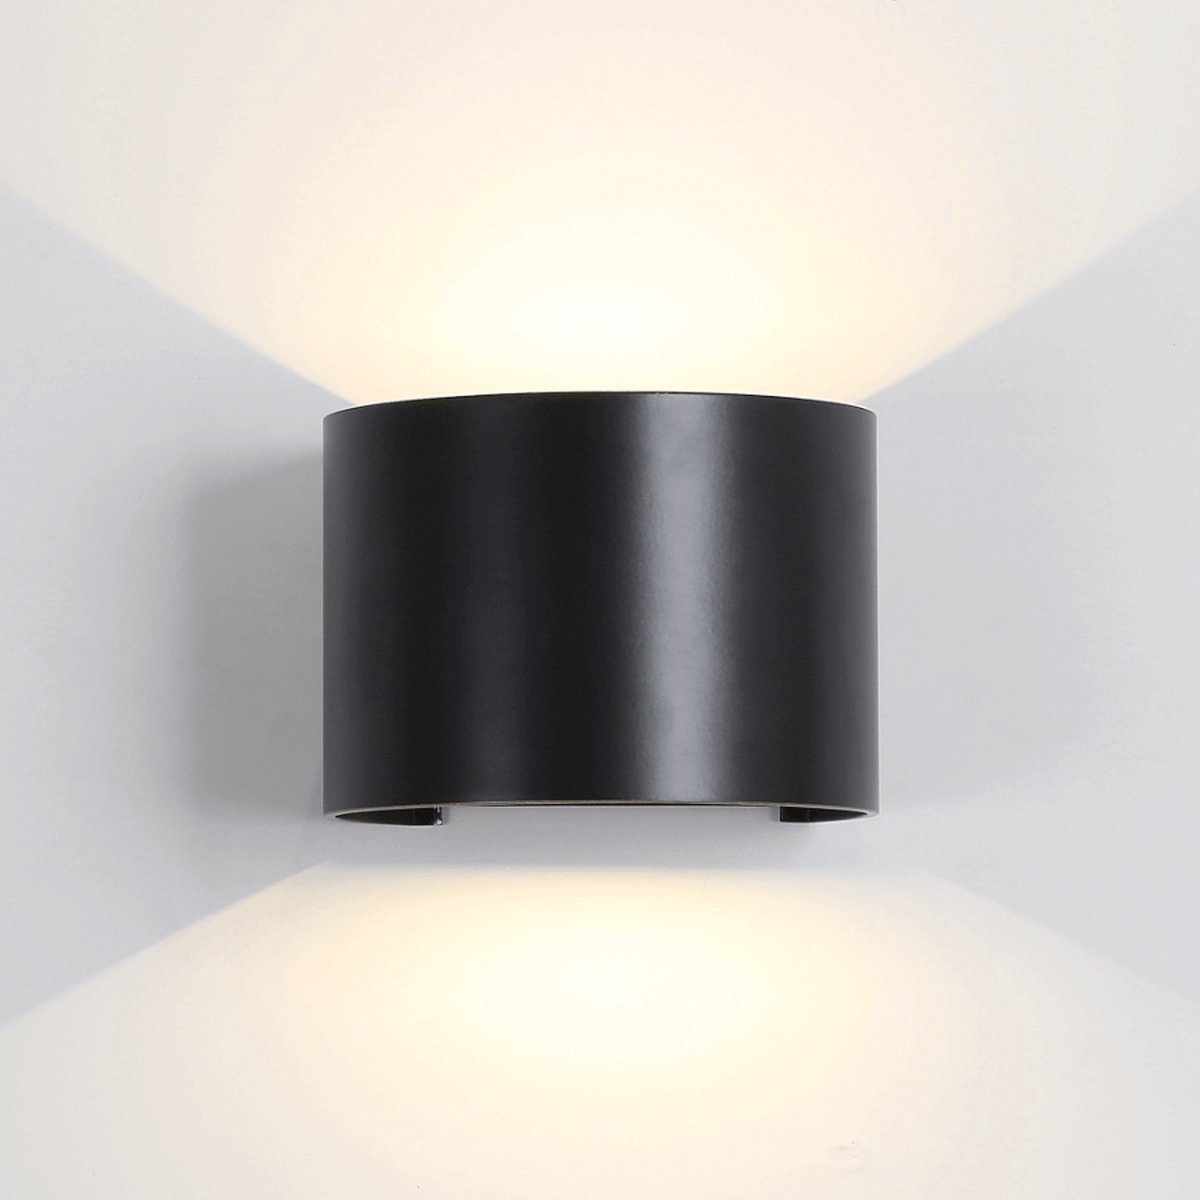 Specilights LED wandlamp zwart 12W - Waterdicht met instelbare stralingshoek - Muurlamp Rond IP65 3000K